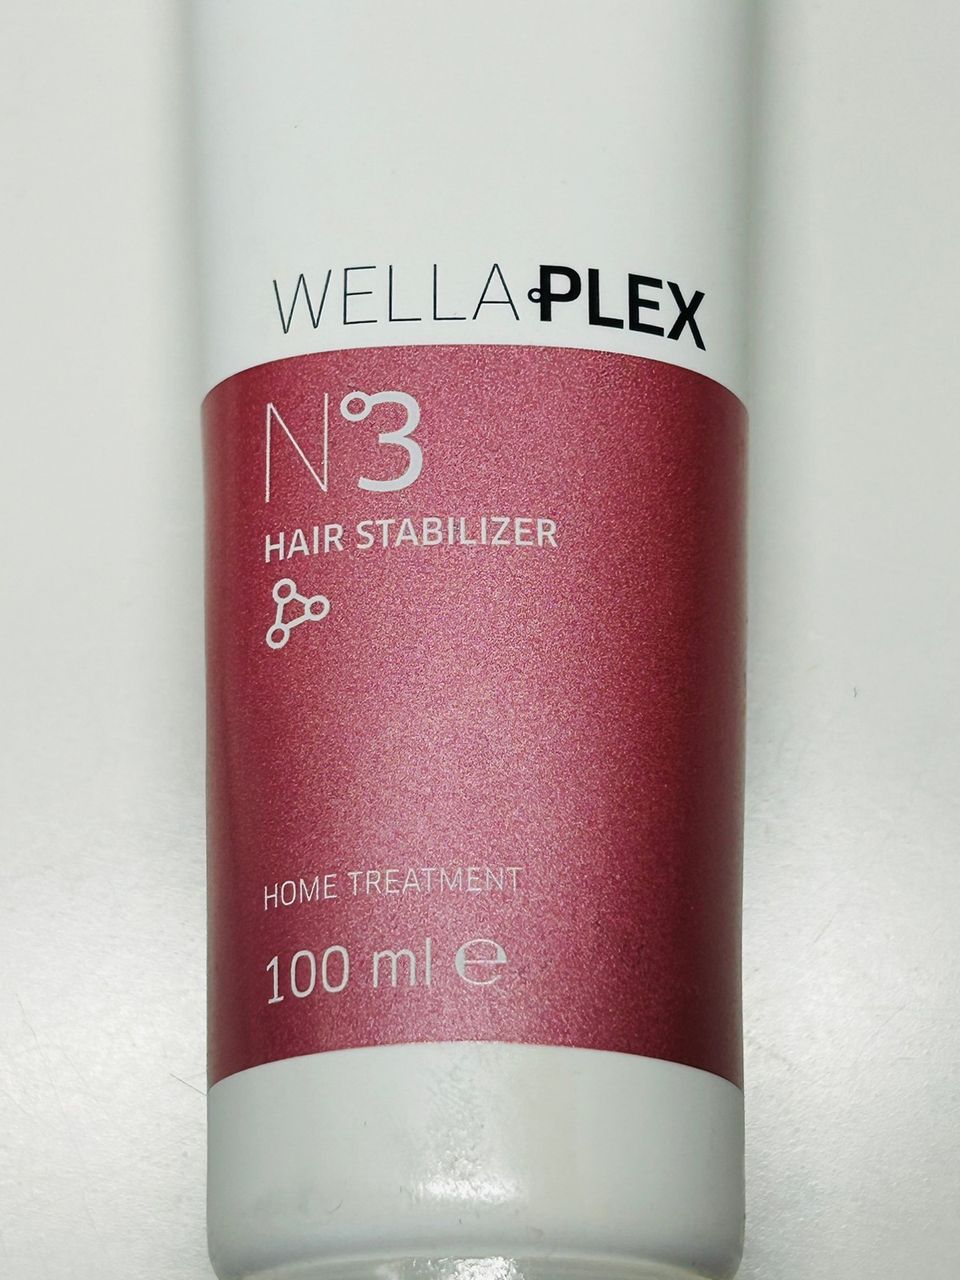 Wellaplex nro 3 hair stabilizer tehohoito 100 ml